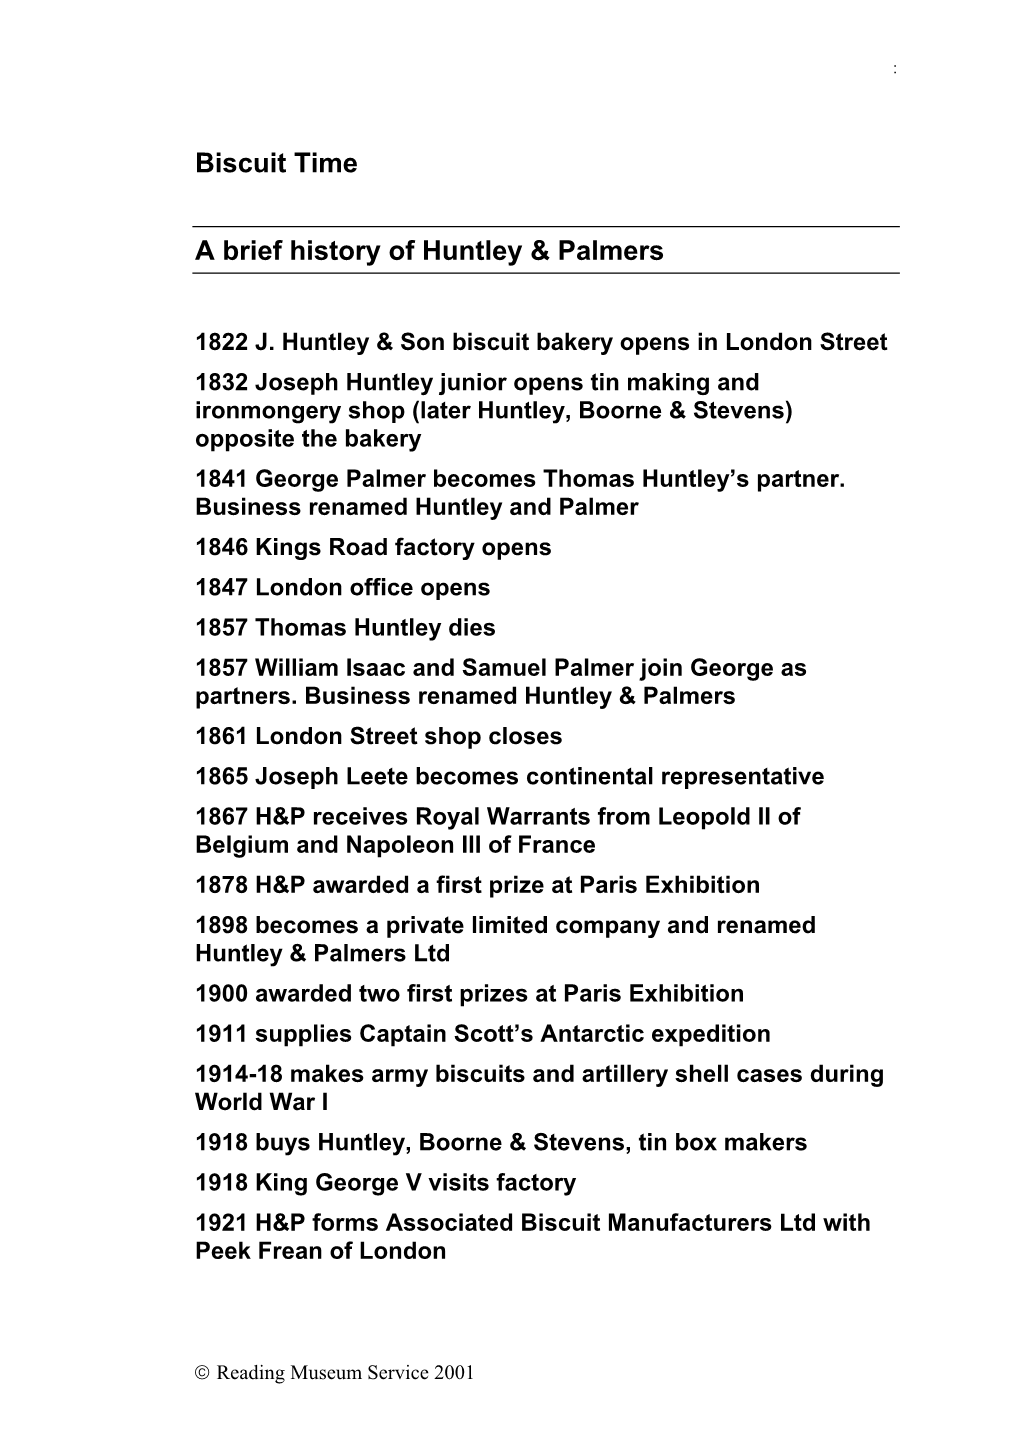 A Brief History of Huntley & Palmers